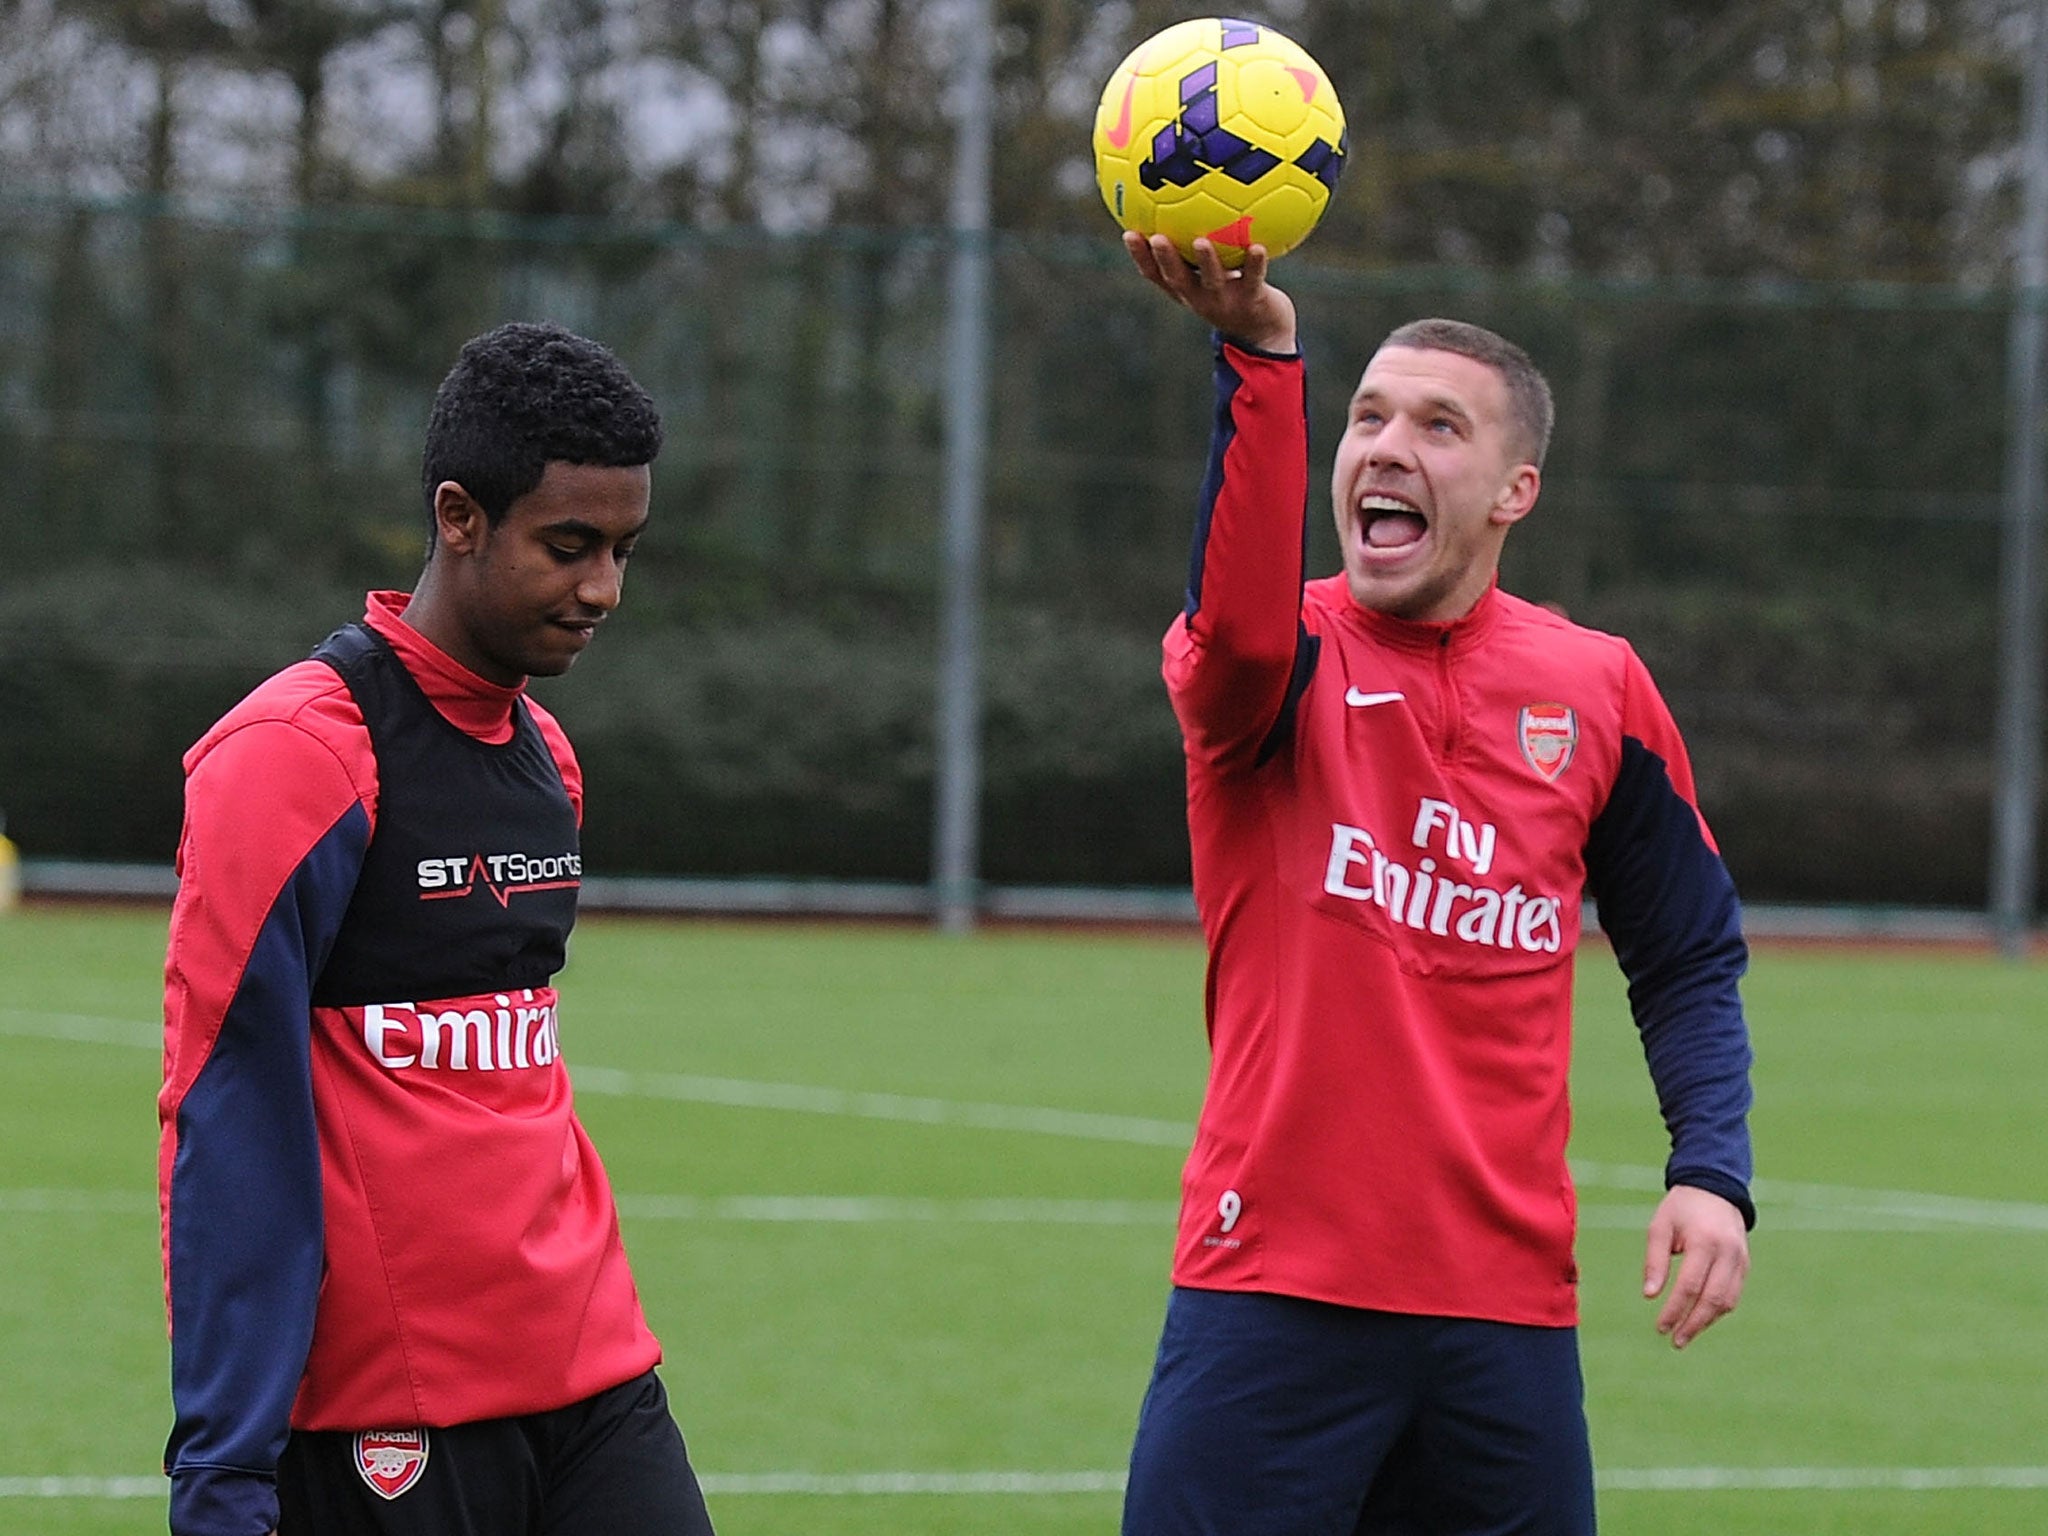 Gedion Zelalem (left) with Arsenal team-mate Lukas Podolski during training this week